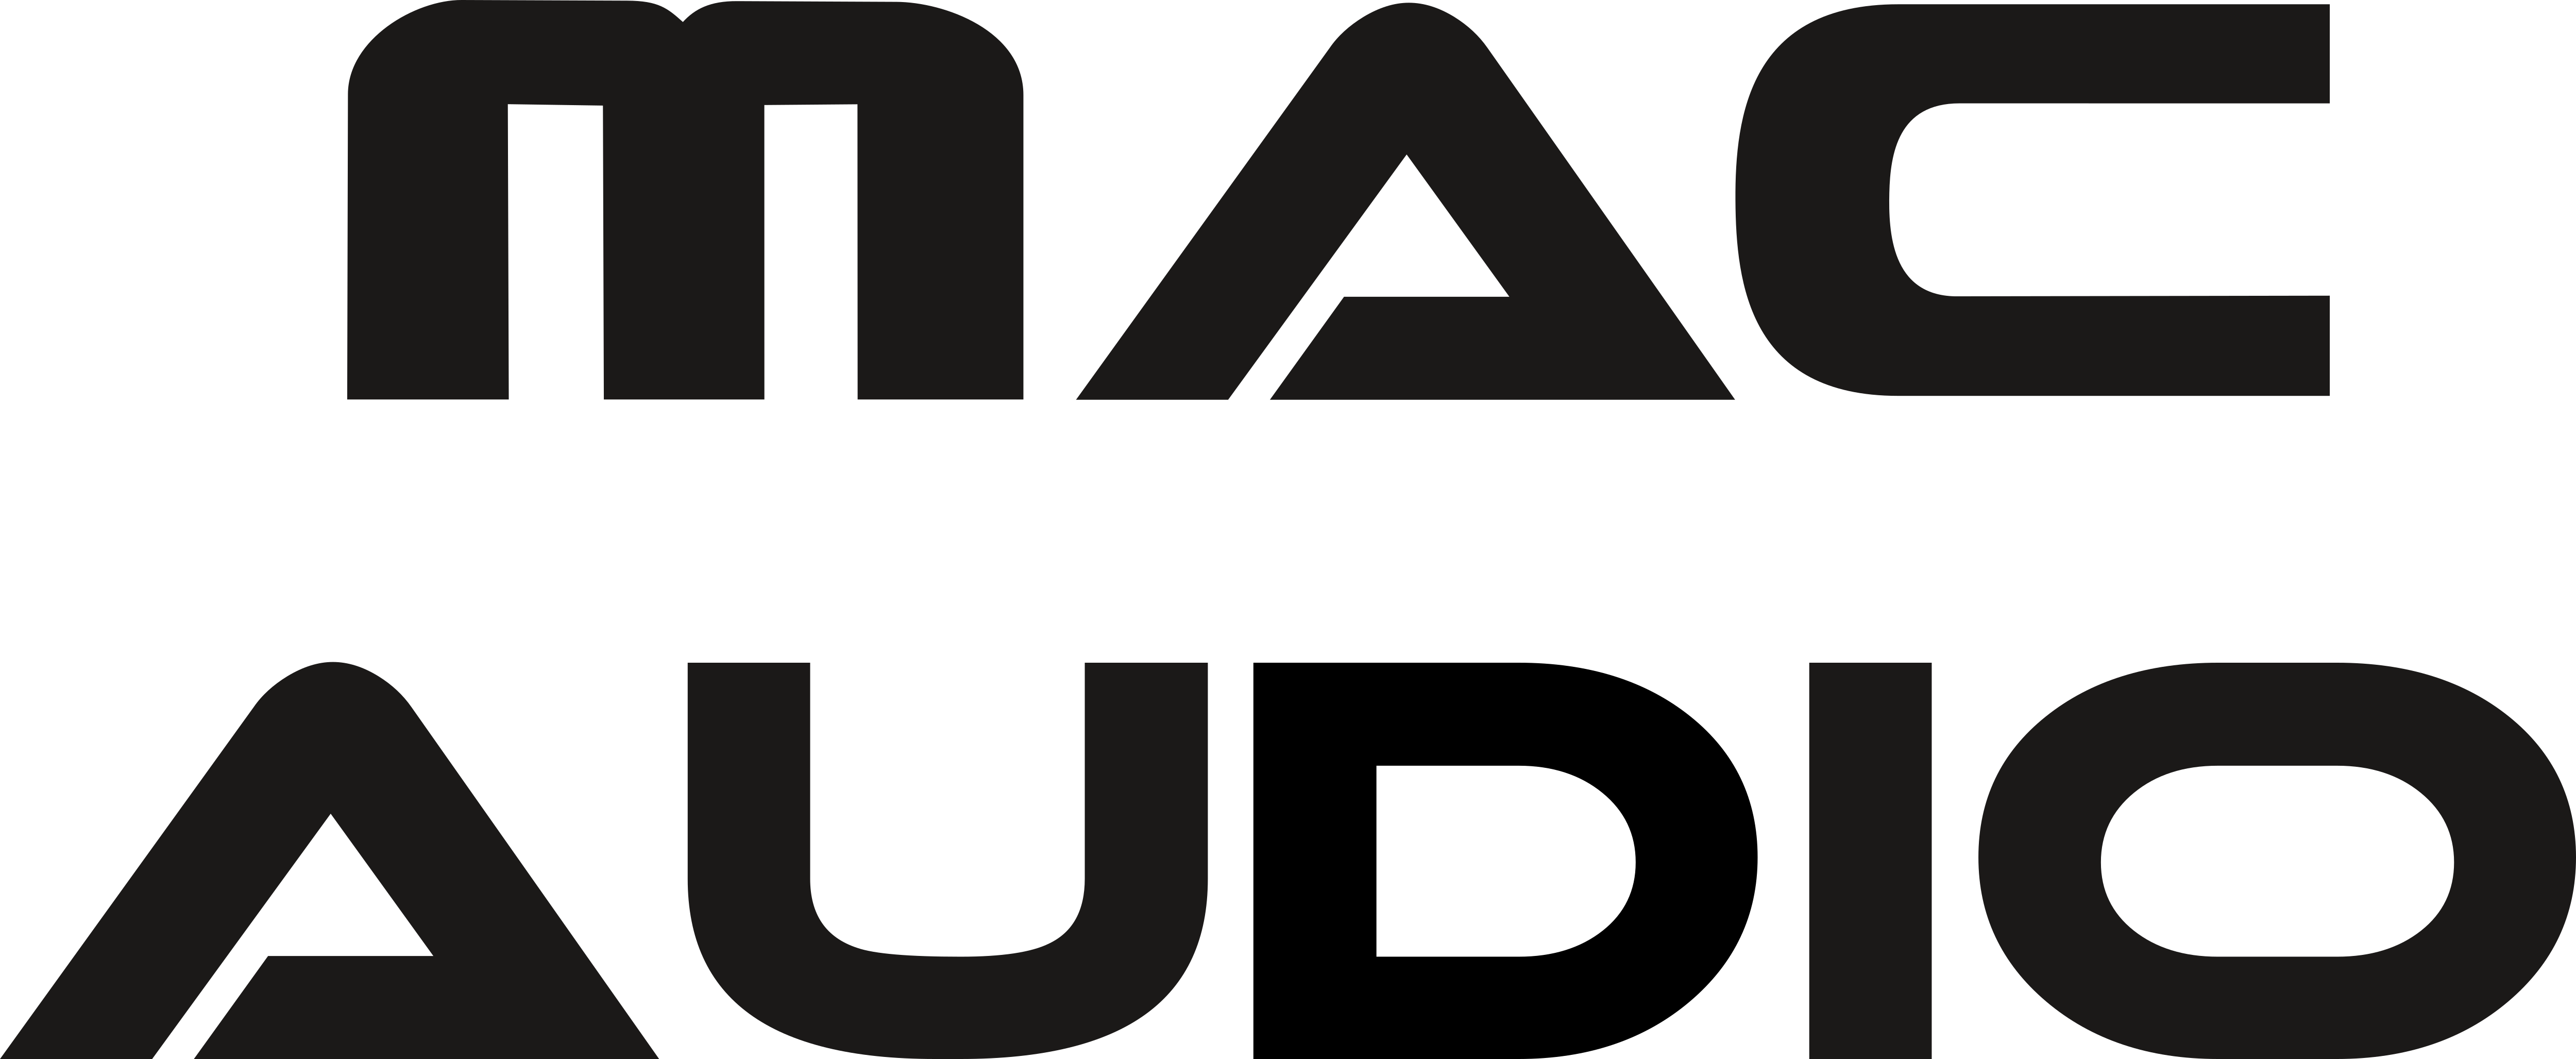 mac conference logo